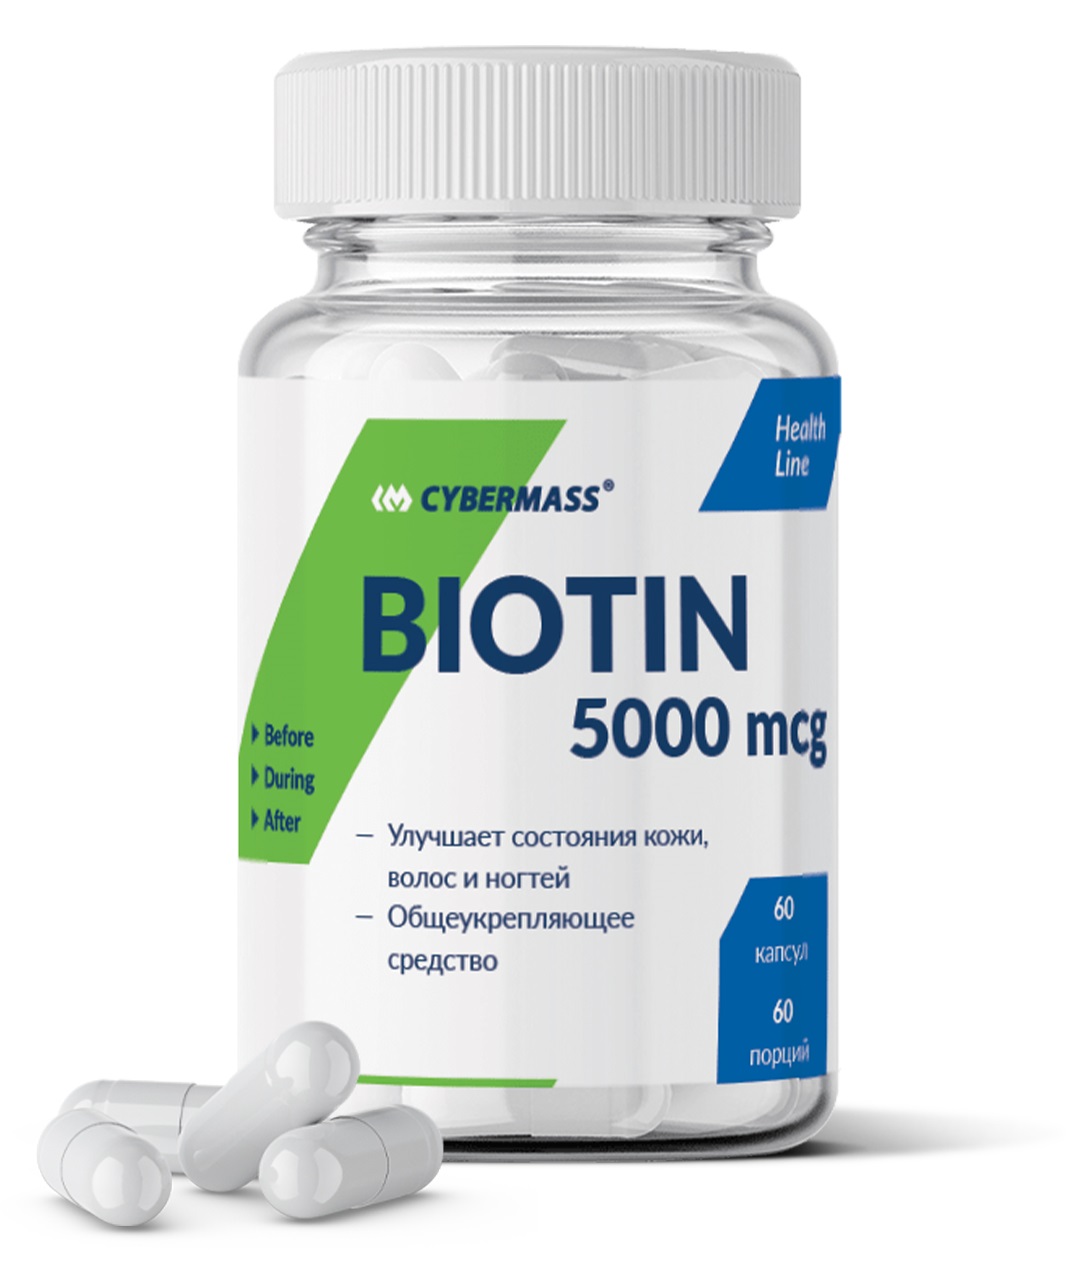 КиберМасс Пищевая добавка Biotin 5000 мкг, 60 капсул (CyberMass, Health line) фото 0